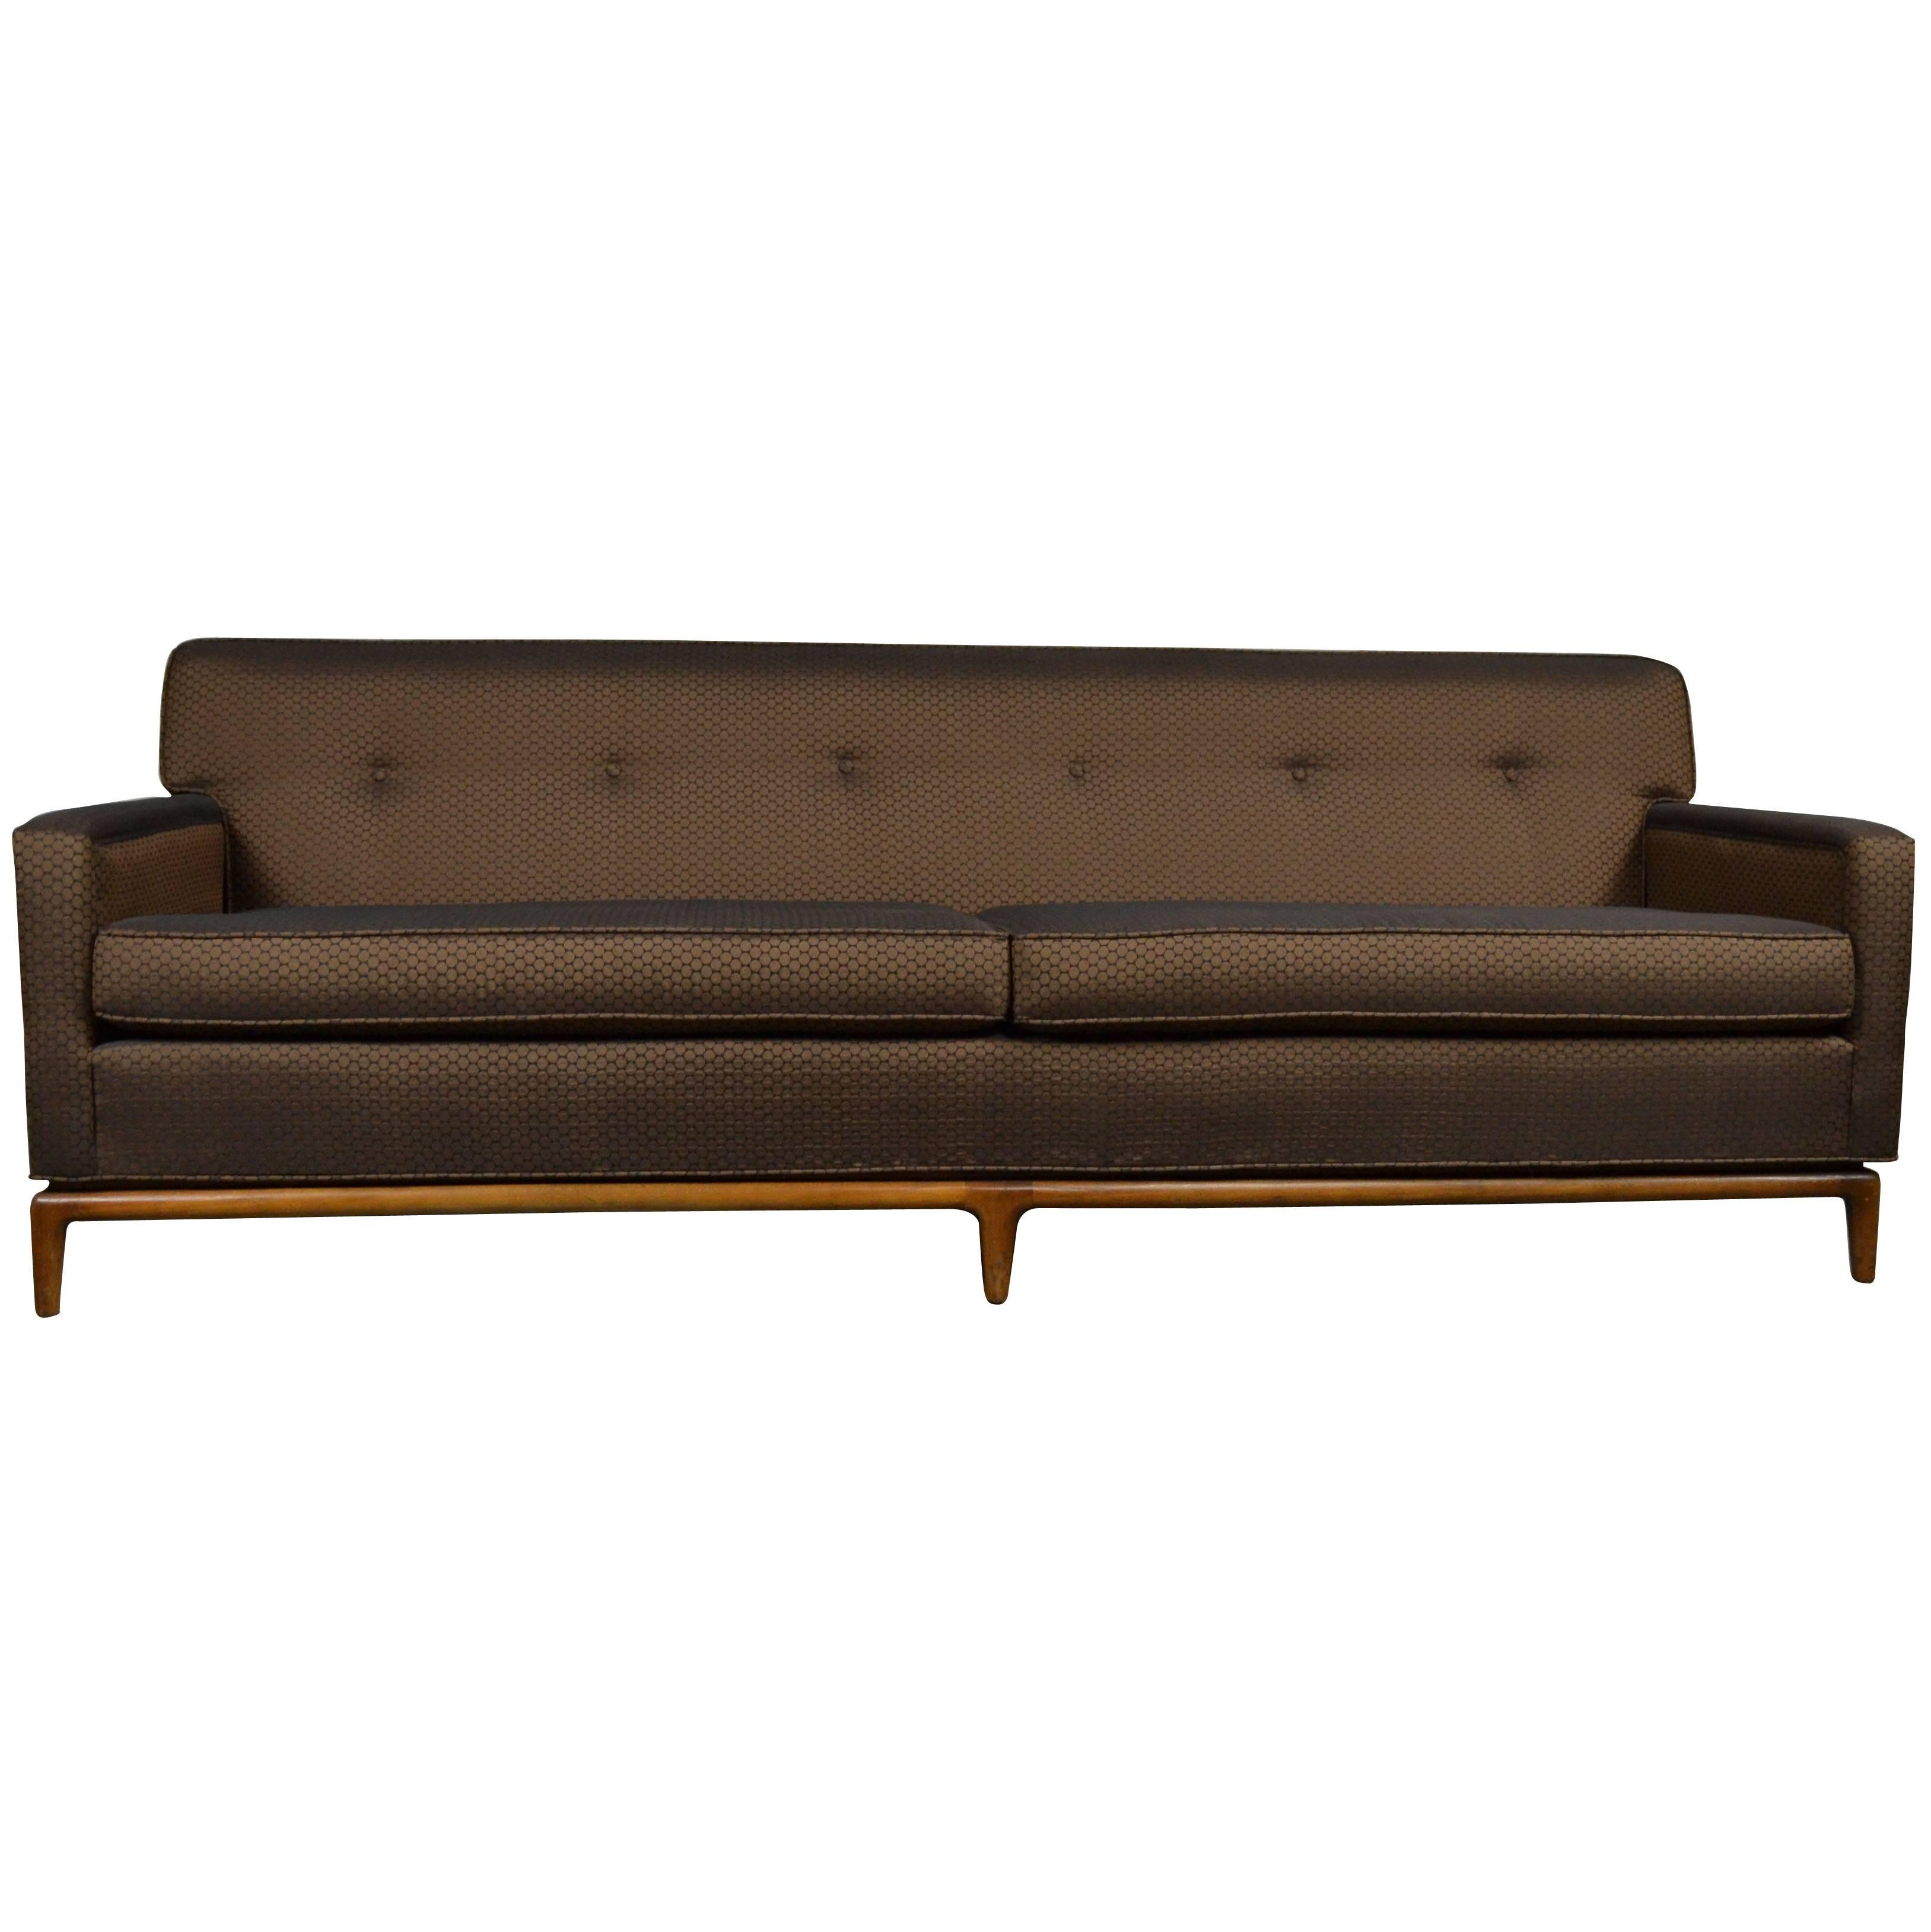 Vintage Mid Century Modern Tufted Tight Back Lawson Style Sofa on Walnut Base